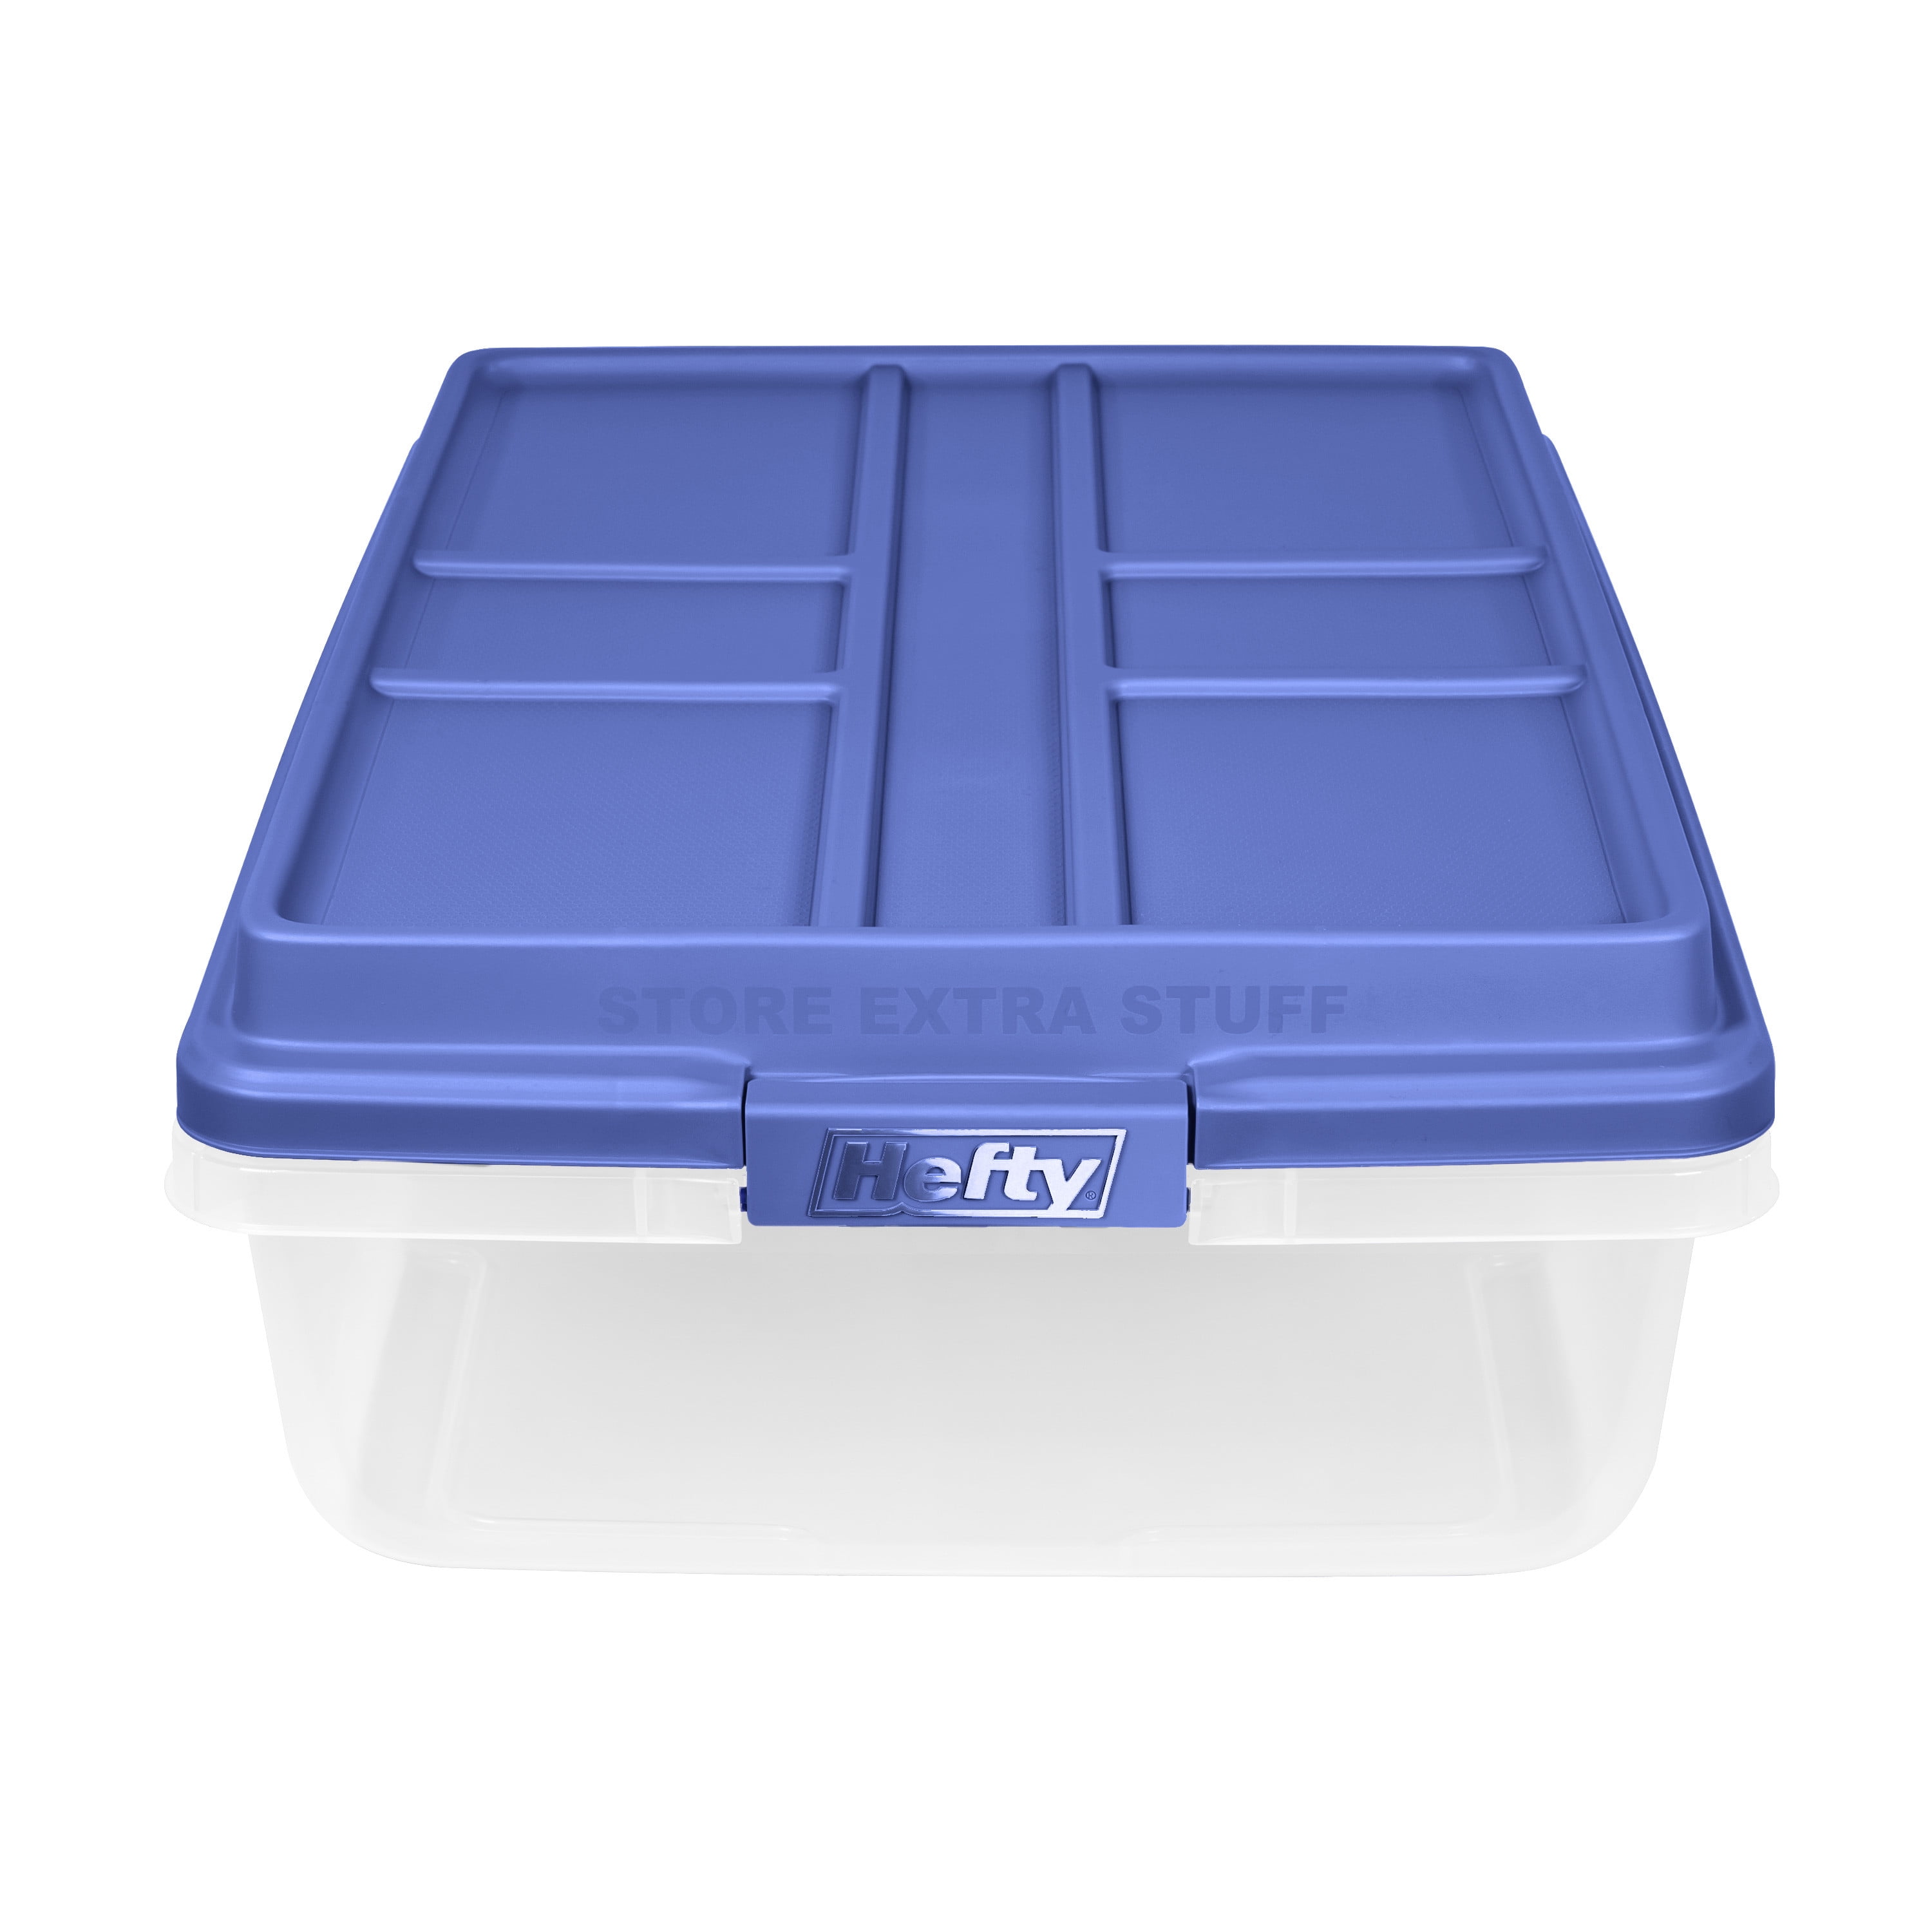  Hefty HI-RISE Clear Plastic Bin with Smoke Blue Lid (6